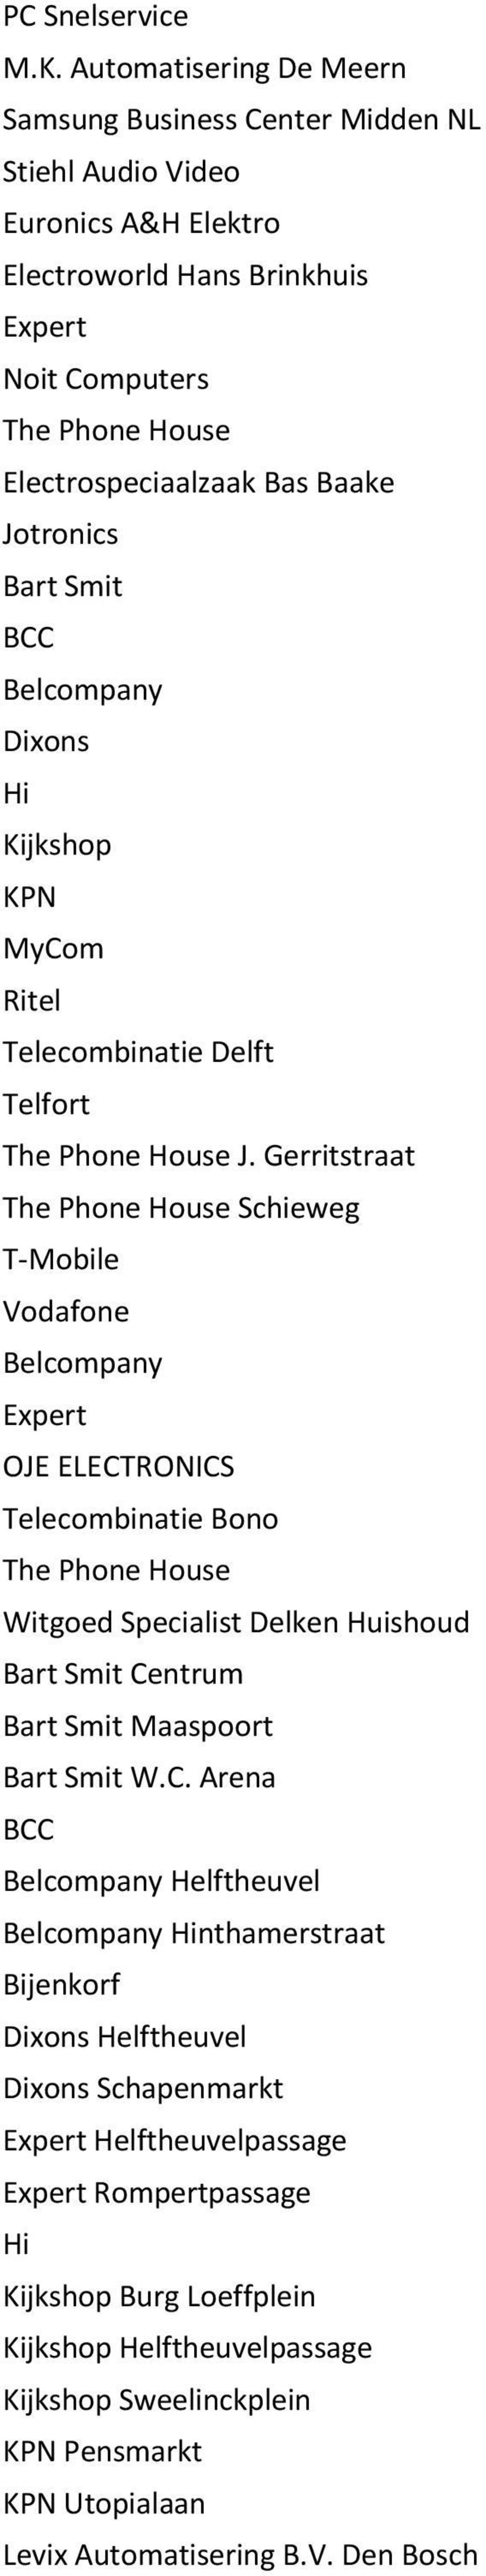 Electrospeciaalzaak Bas Baake Jotronics BCC MyCom Ritel Telecombinatie Delft Telfort J.